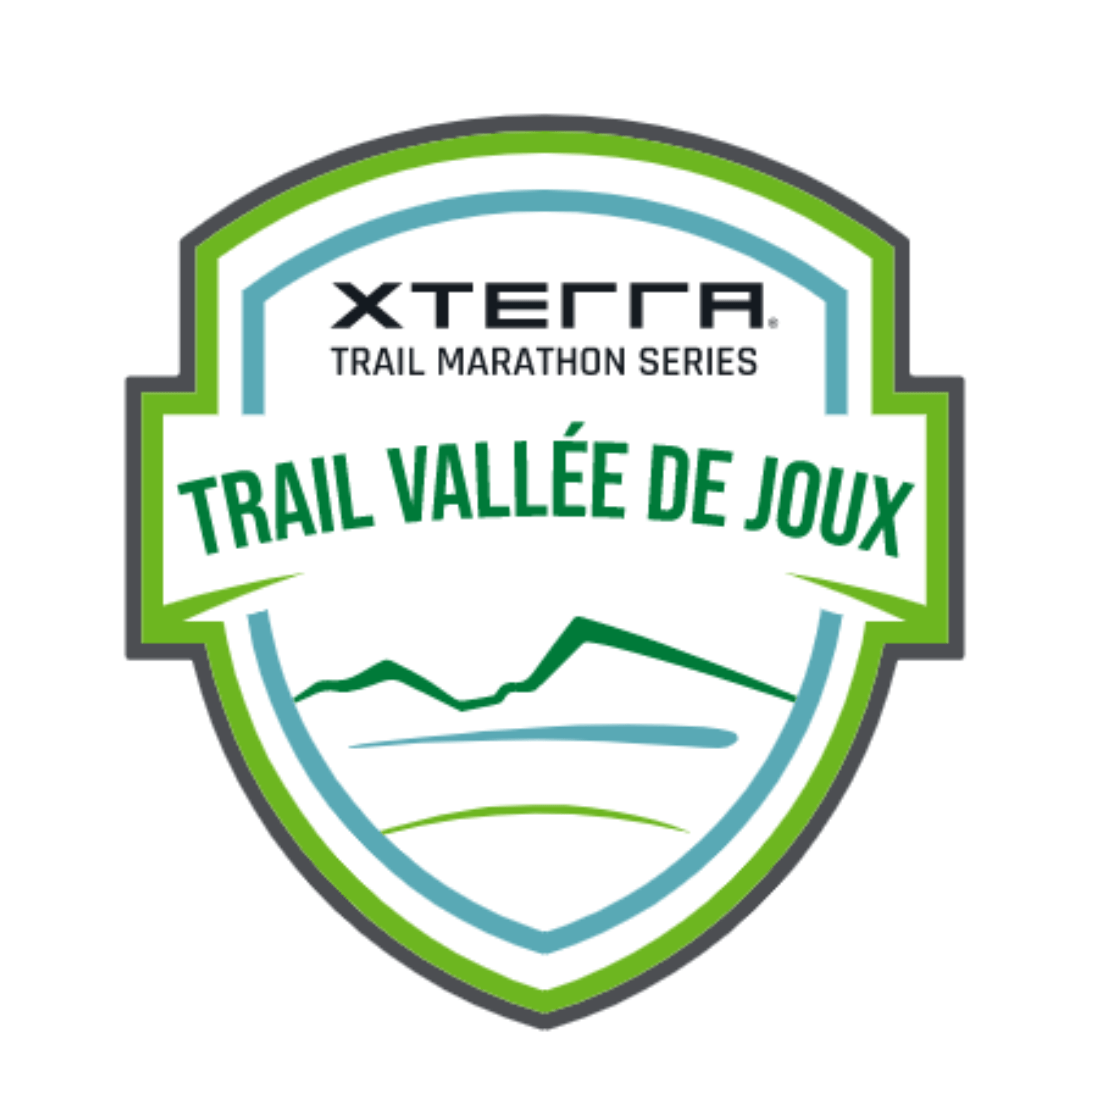 Logo-Trail-Vallée-de-Joux-Xterra